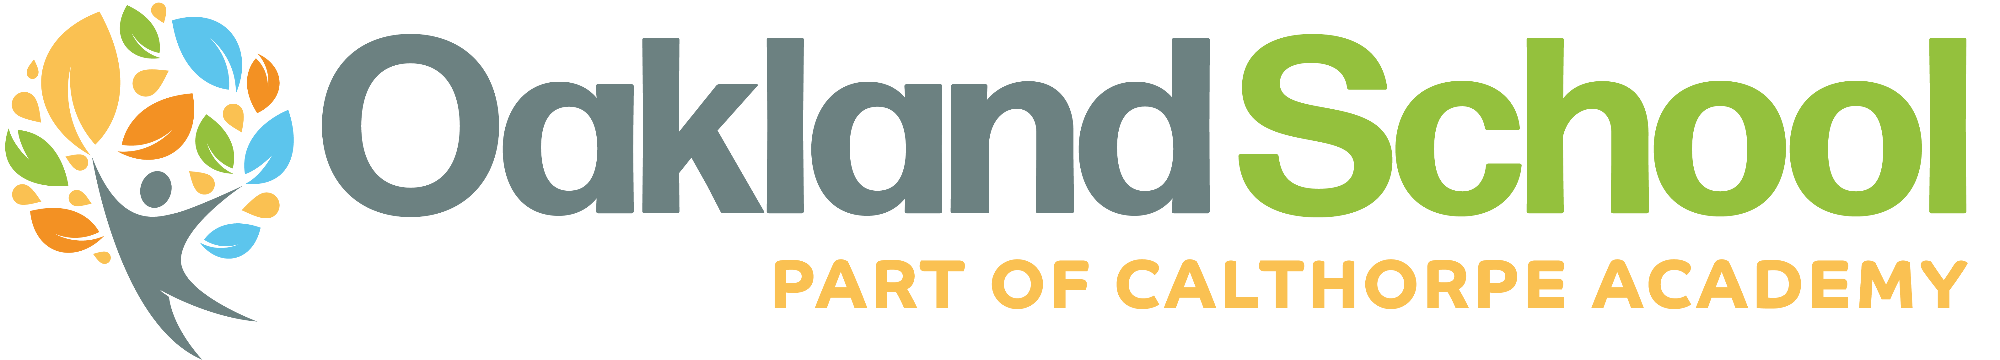 Oakland School logo